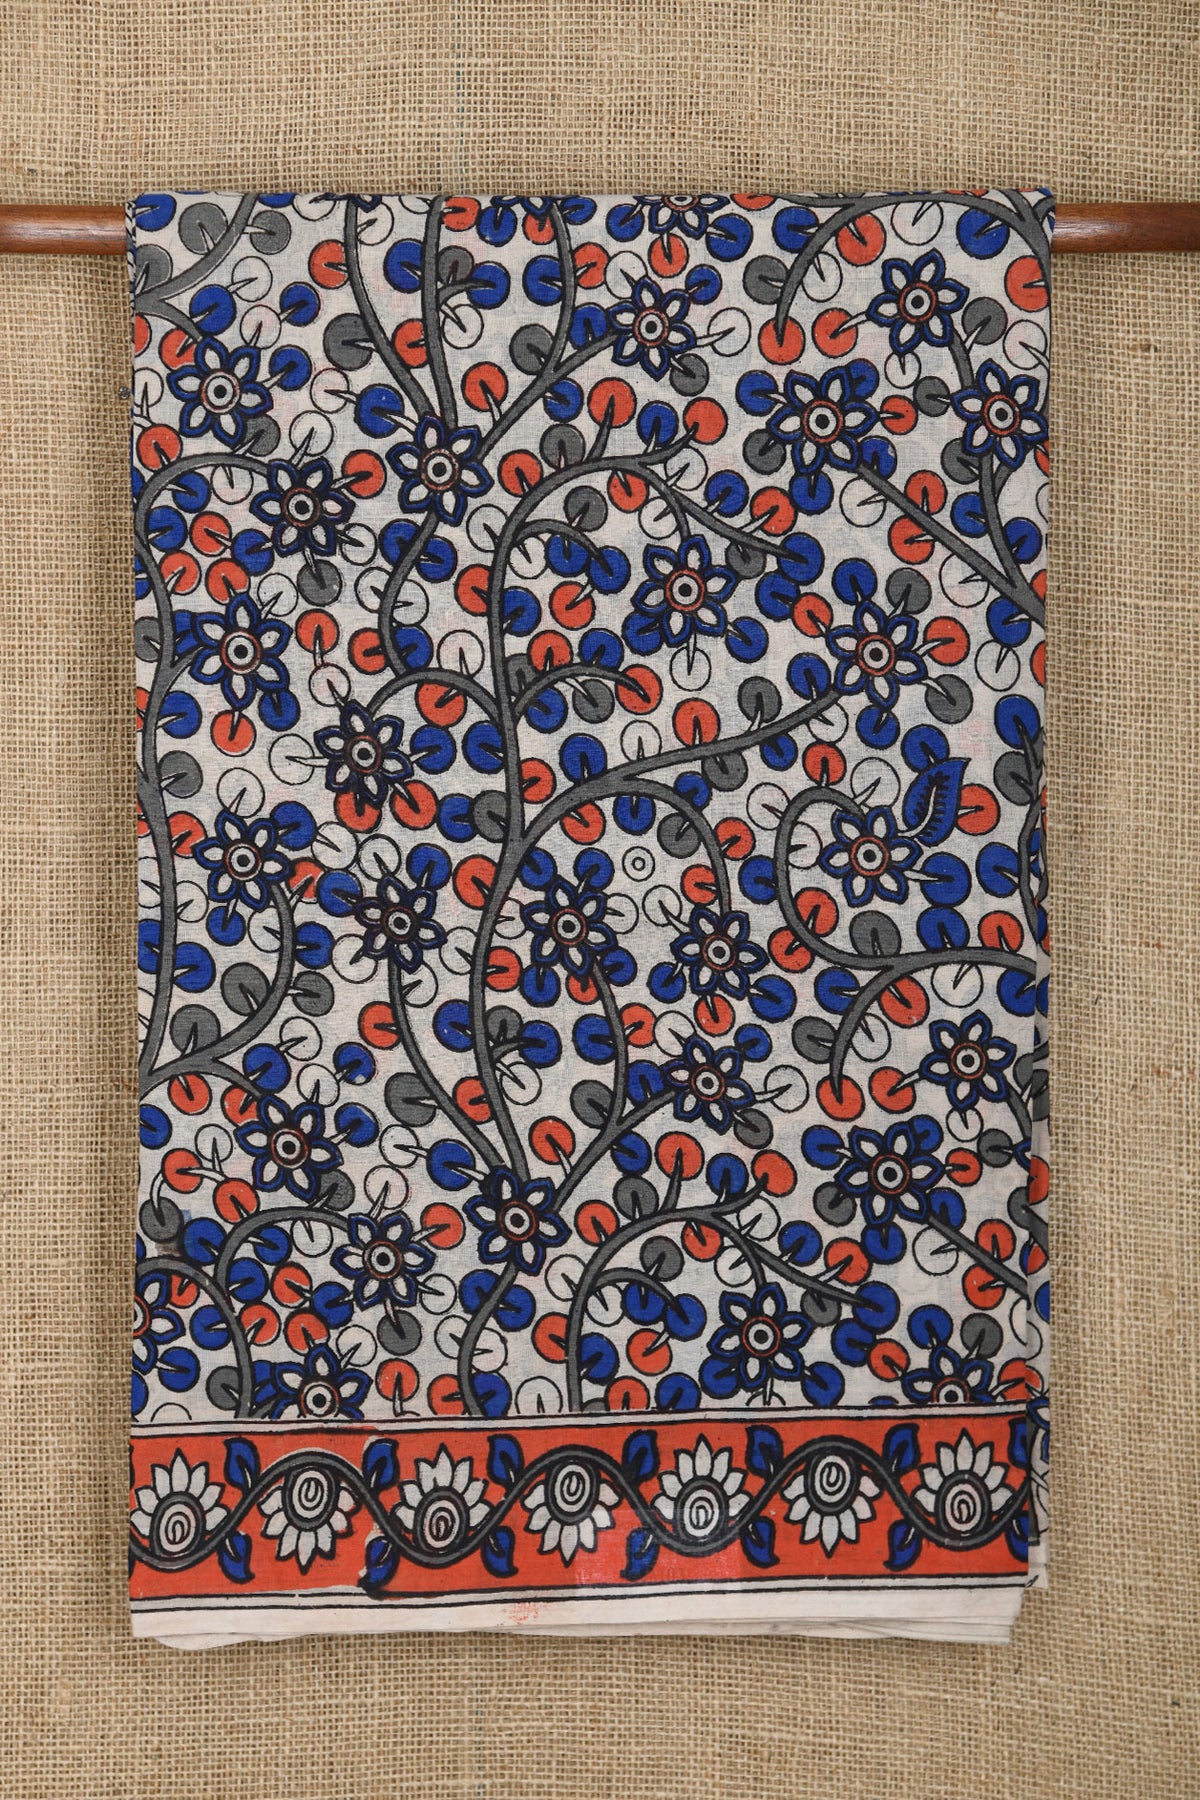 Floral Creepers Design Kalamkari Printed Multicolor Cotton Saree